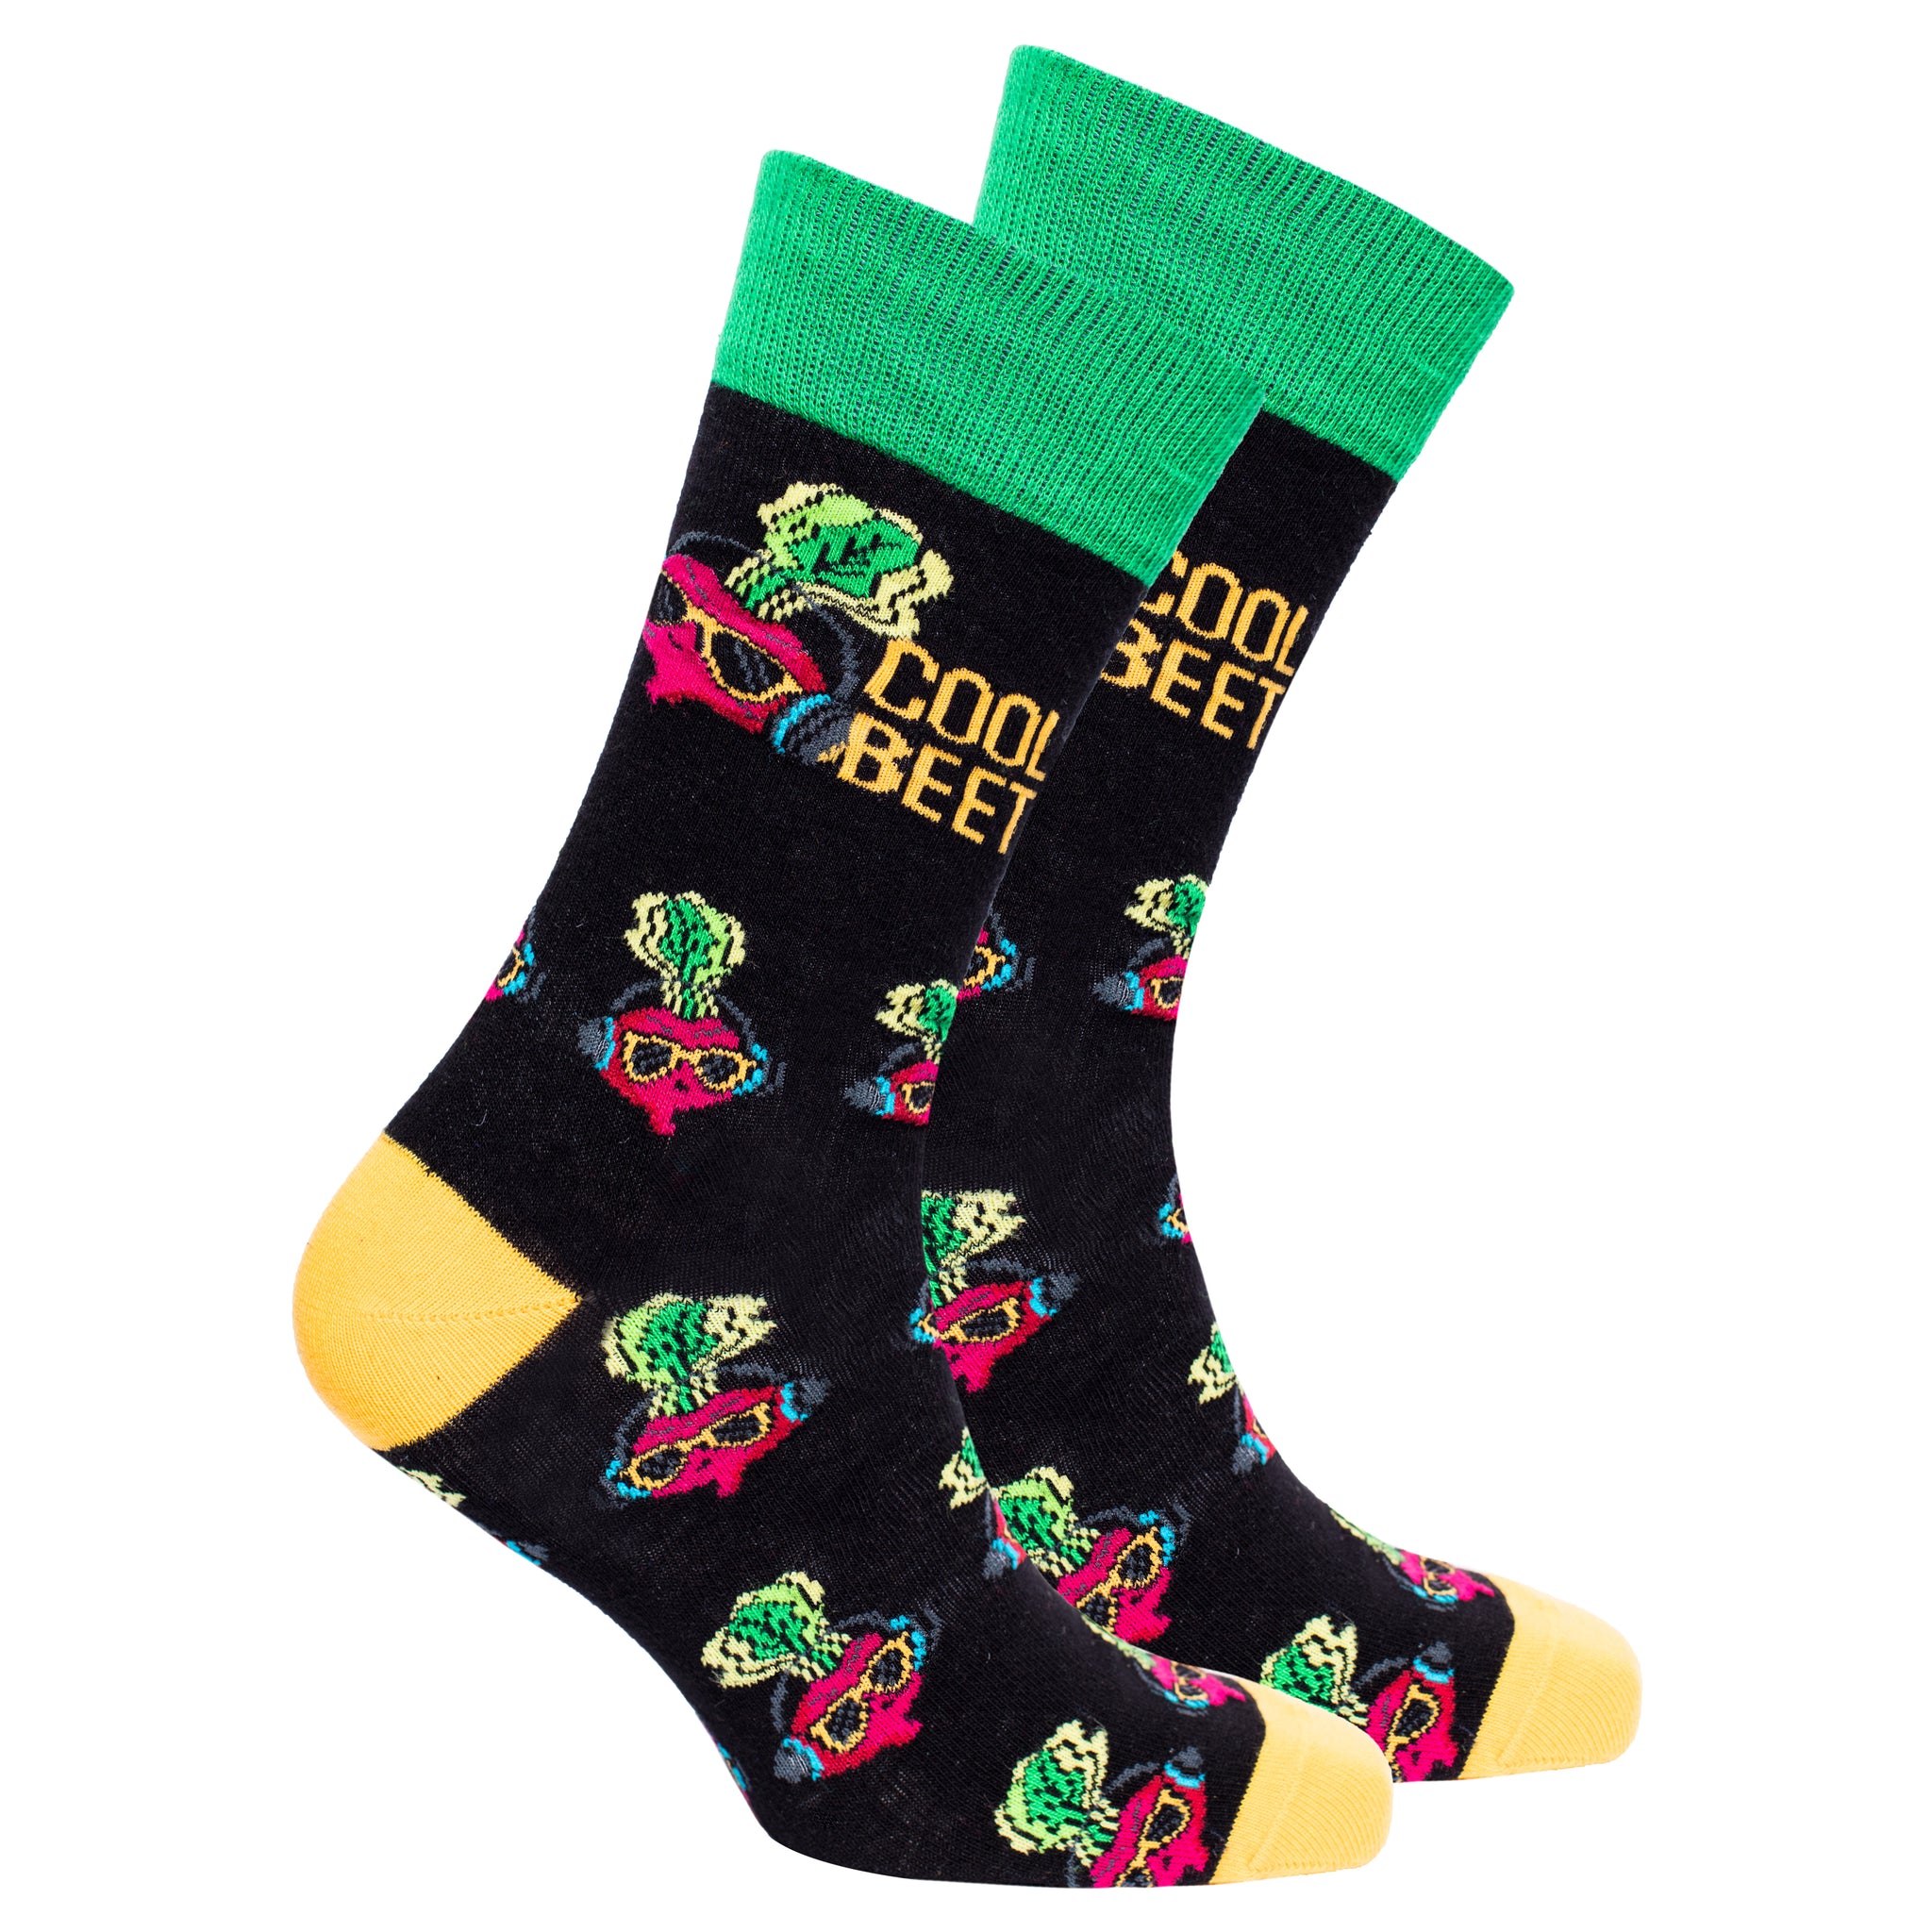 Men's Cool Beet Socks